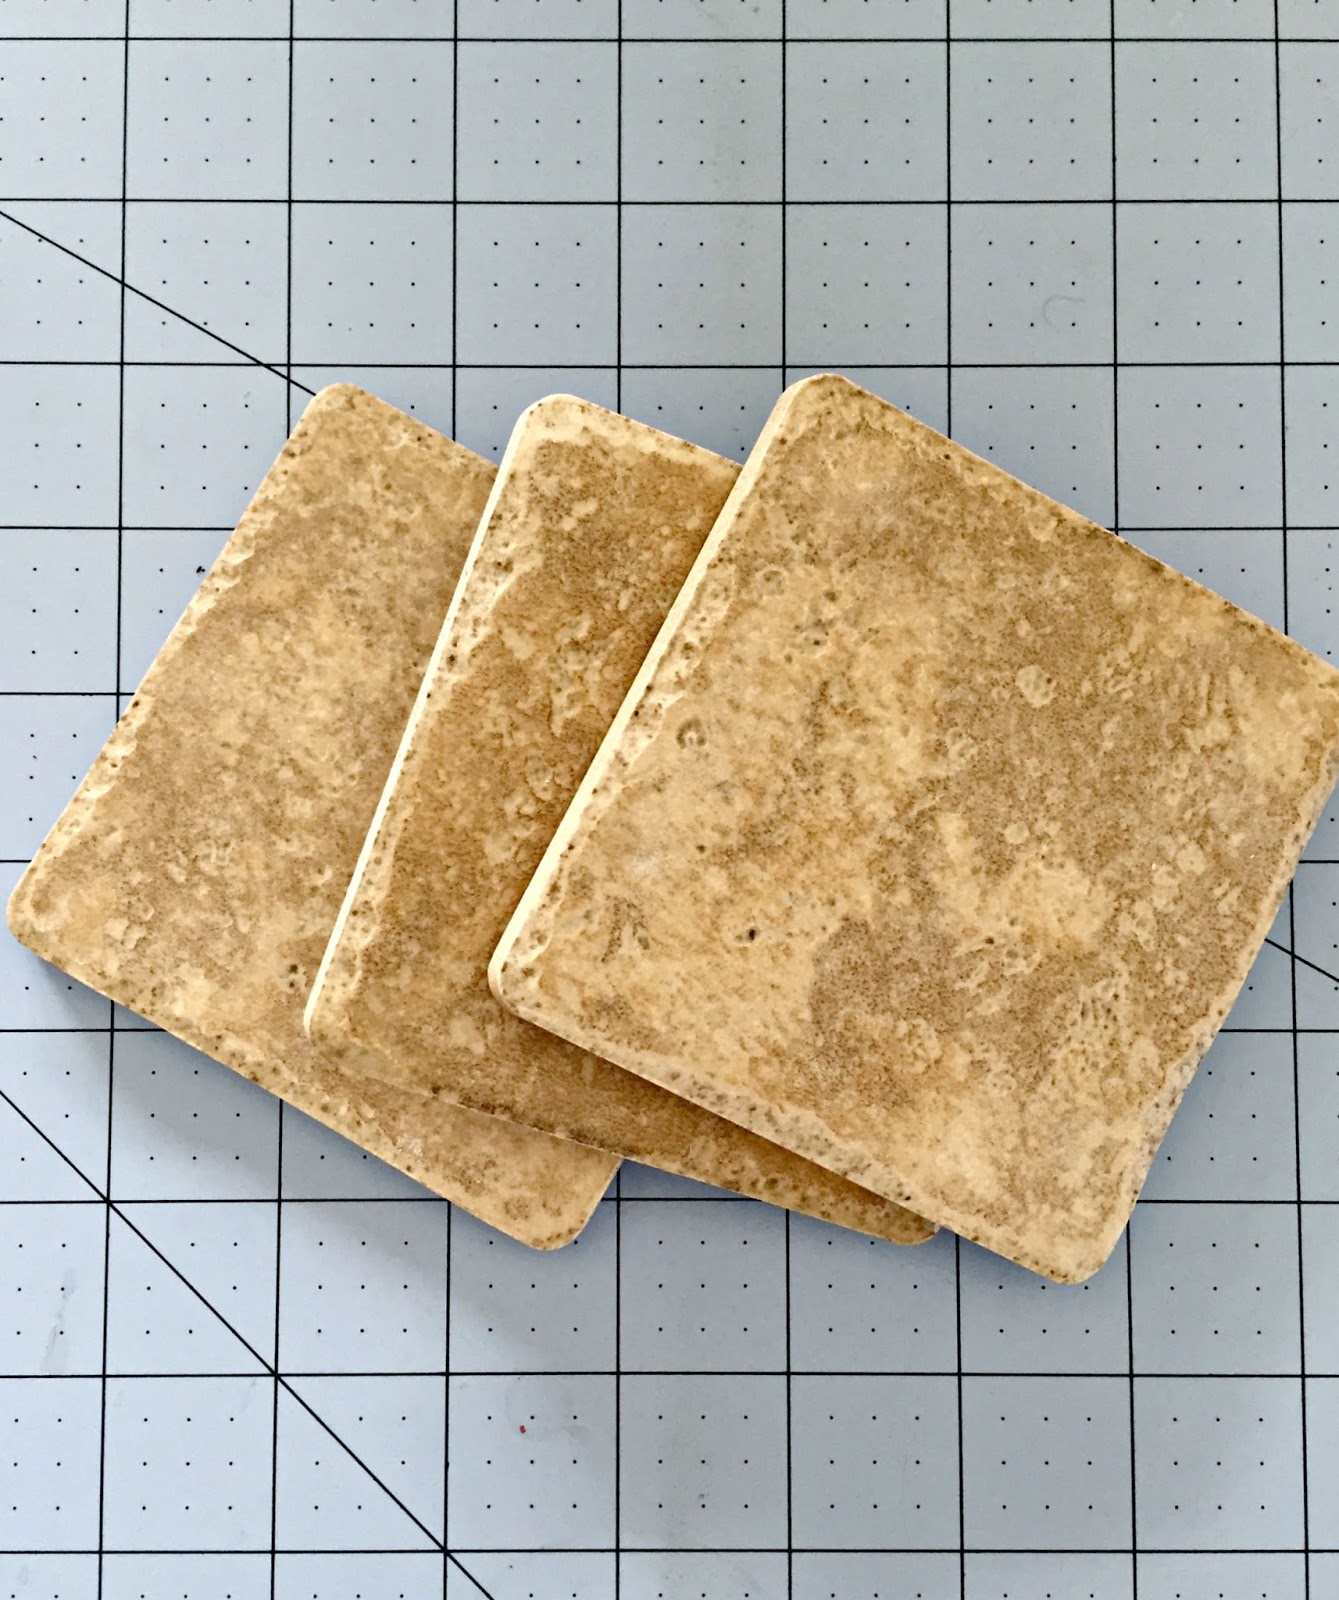 How to Make Mod Podge Photo Coasters Using Square Tiles